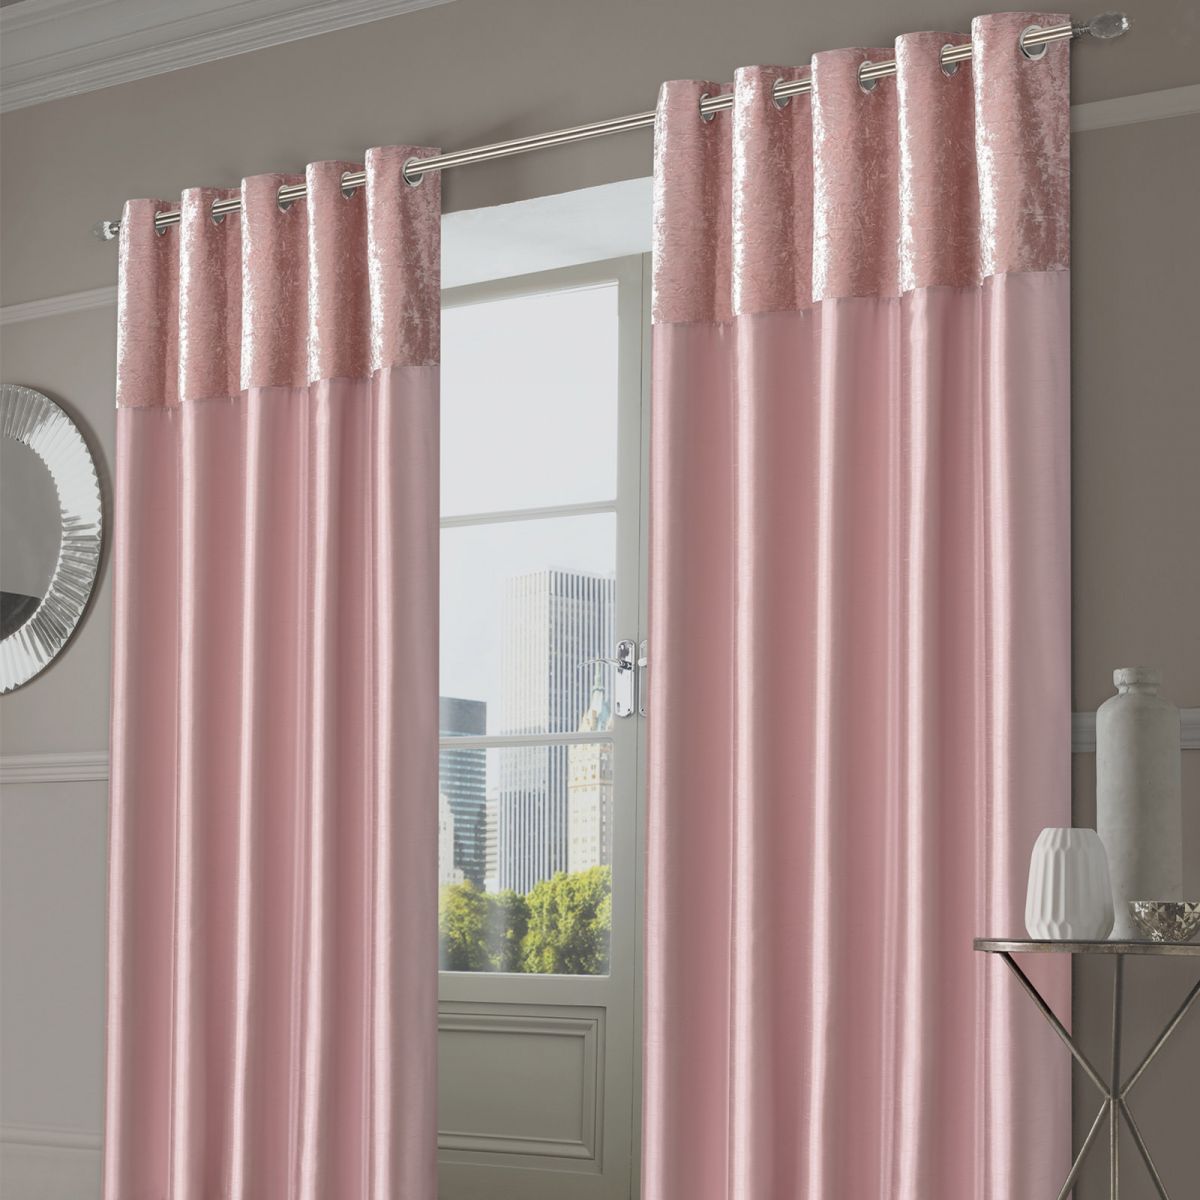 Sienna Home Manhattan Crushed Velvet Band Eyelet Curtains - Blush Pink, 66" x 90"